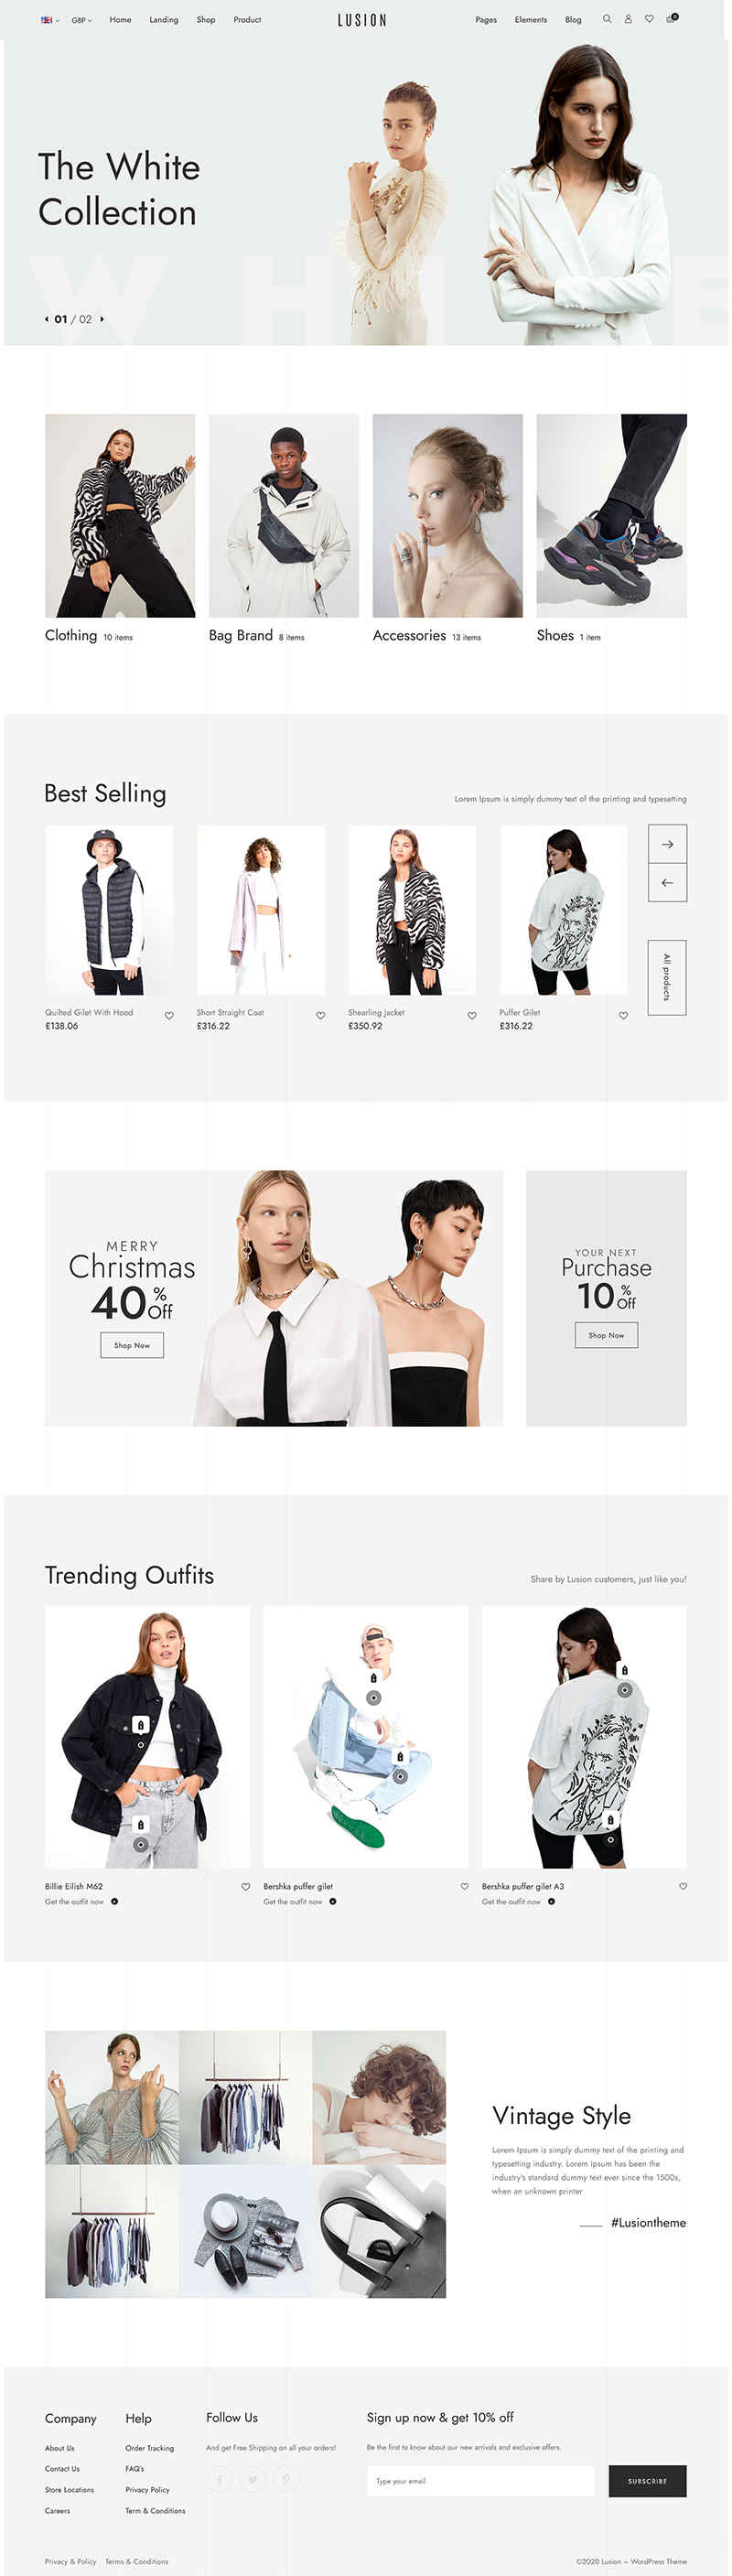 thiet ke website tmi fashion shop 4062